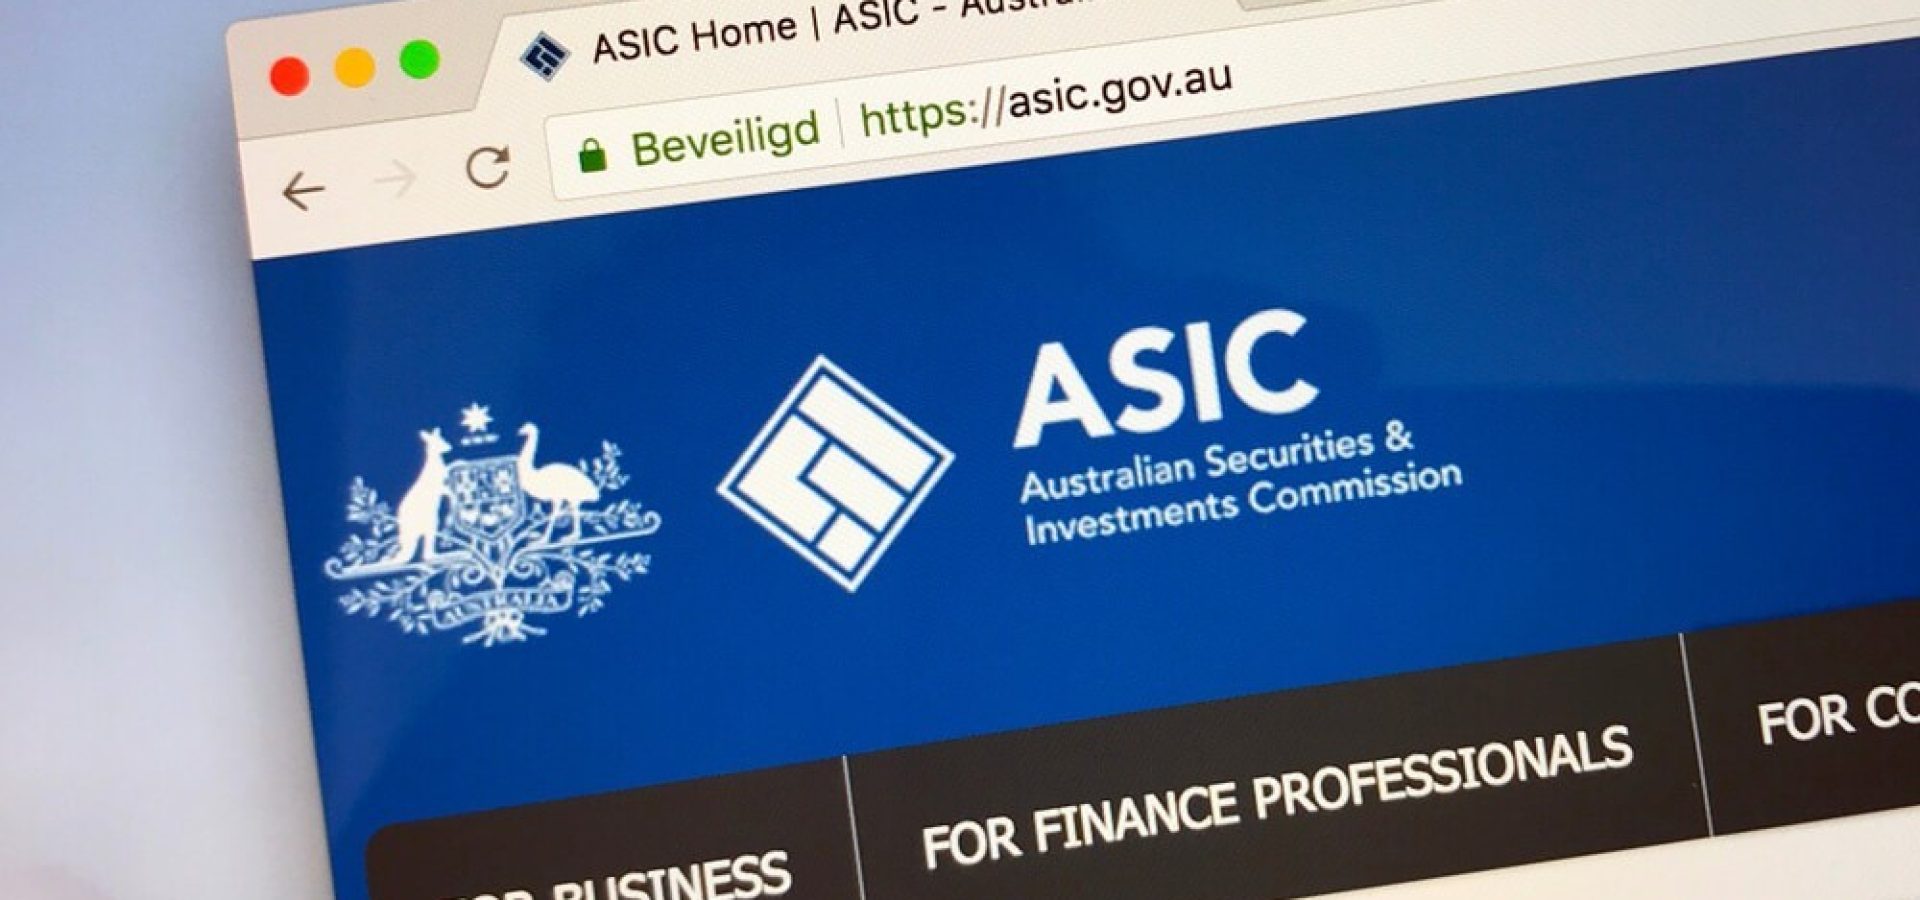 The ASIC website.